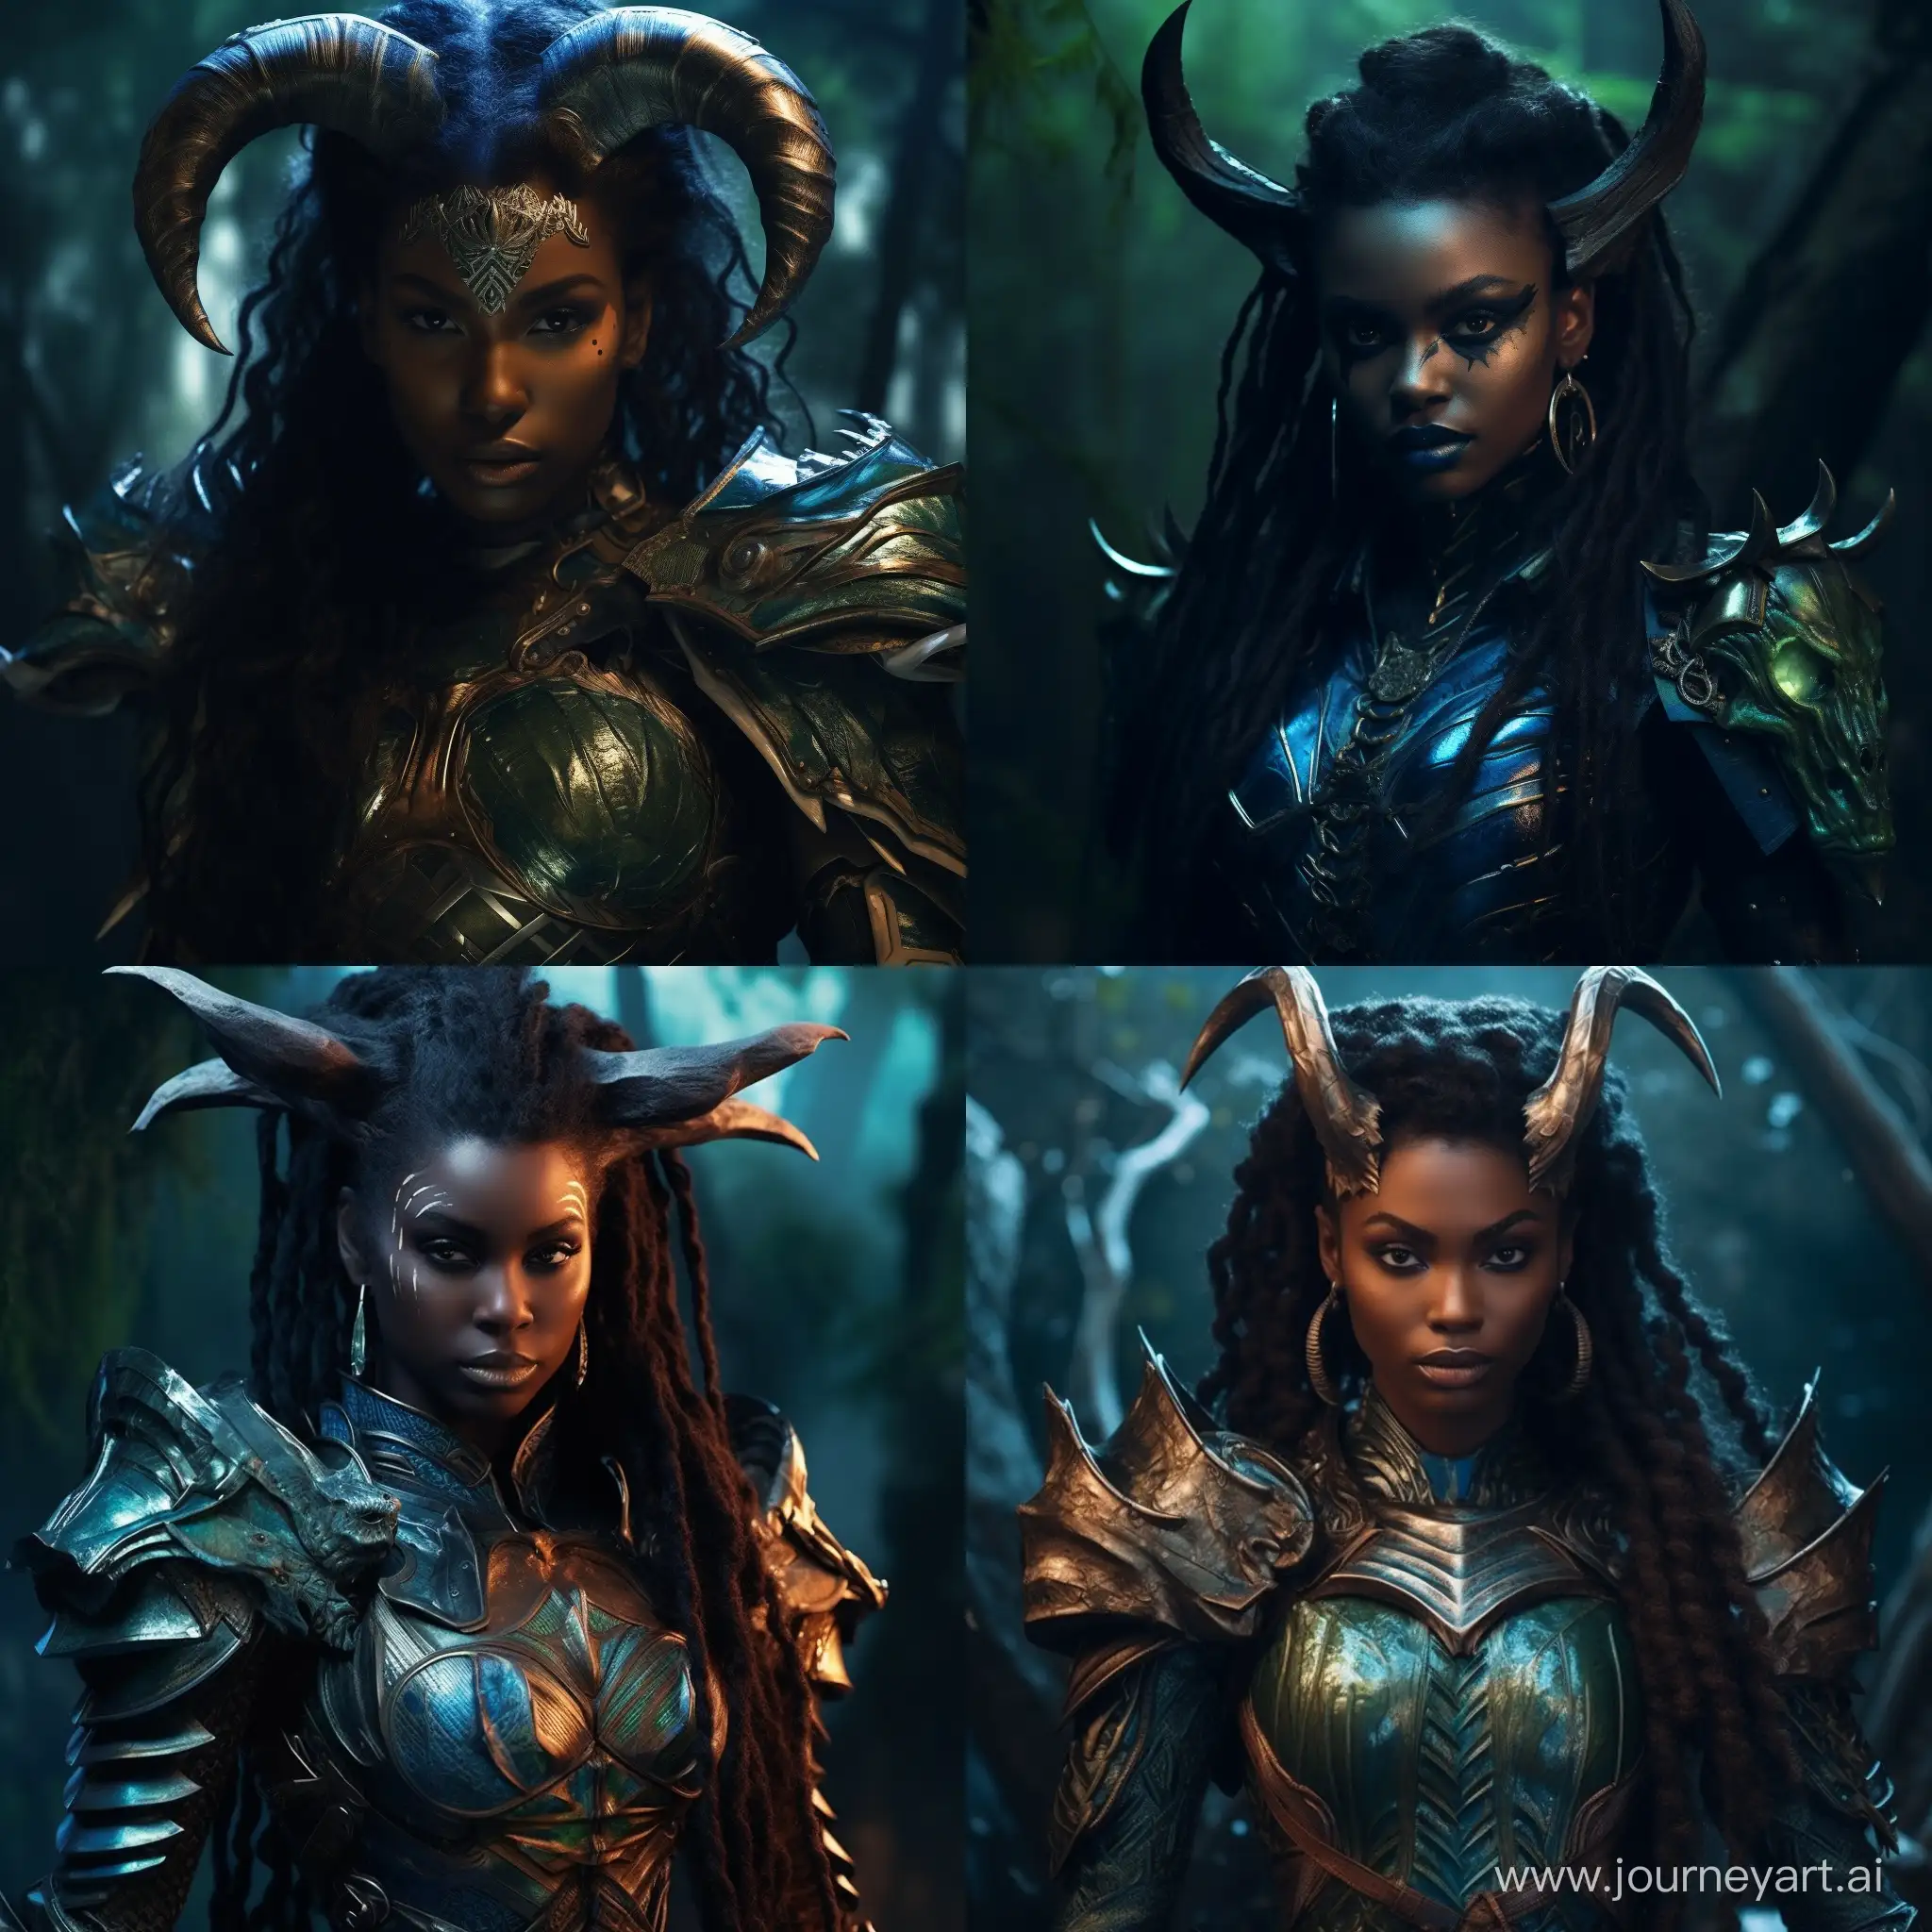 Woman, dark blue skin, small horns, heterochromia, right eye is green, left demonic eye is black and glowing blue, in armour